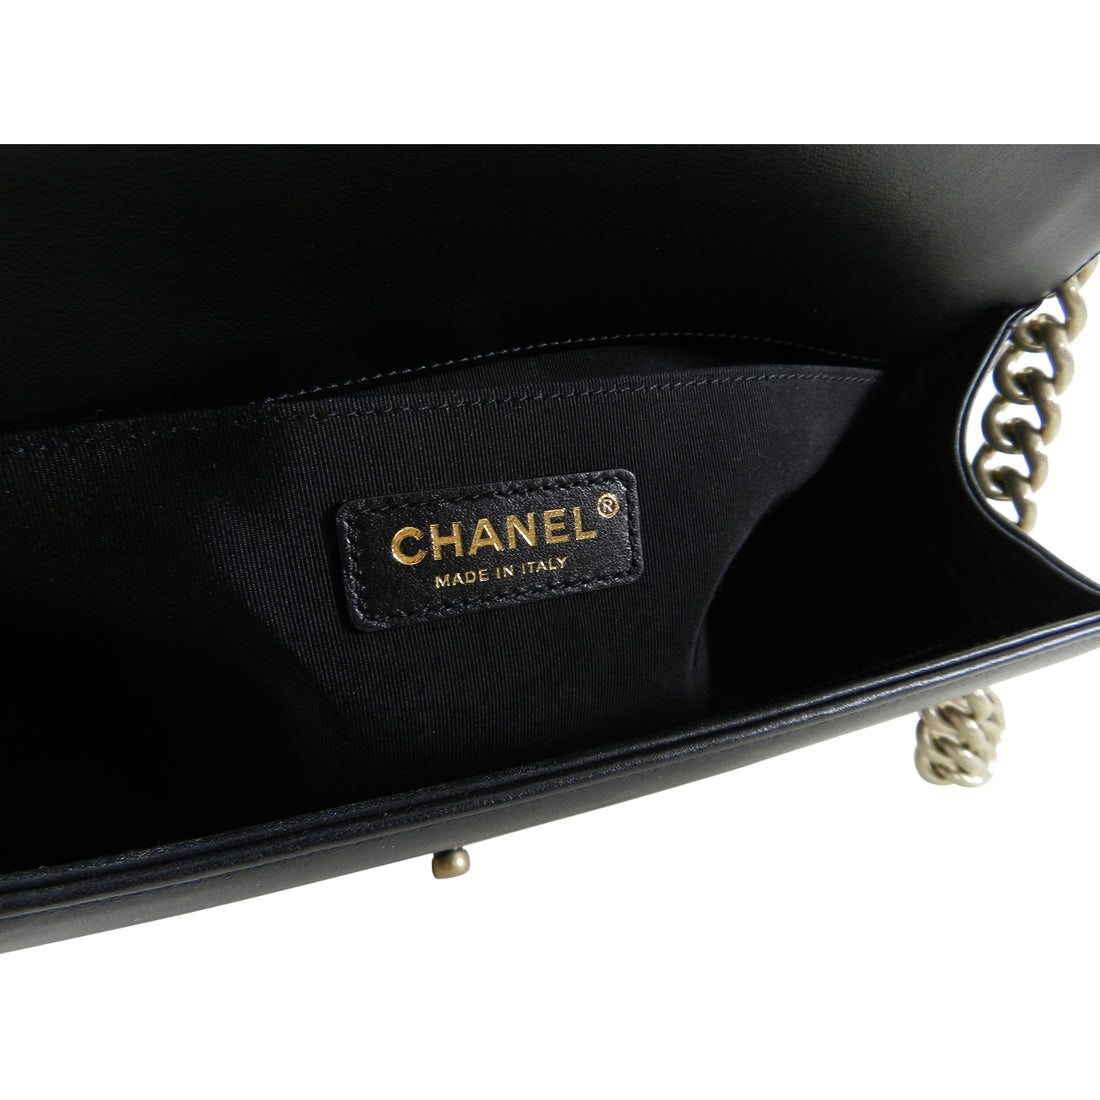 Chanel 16A Le Boy in Rome Medium Black and Gold Chevron Bag